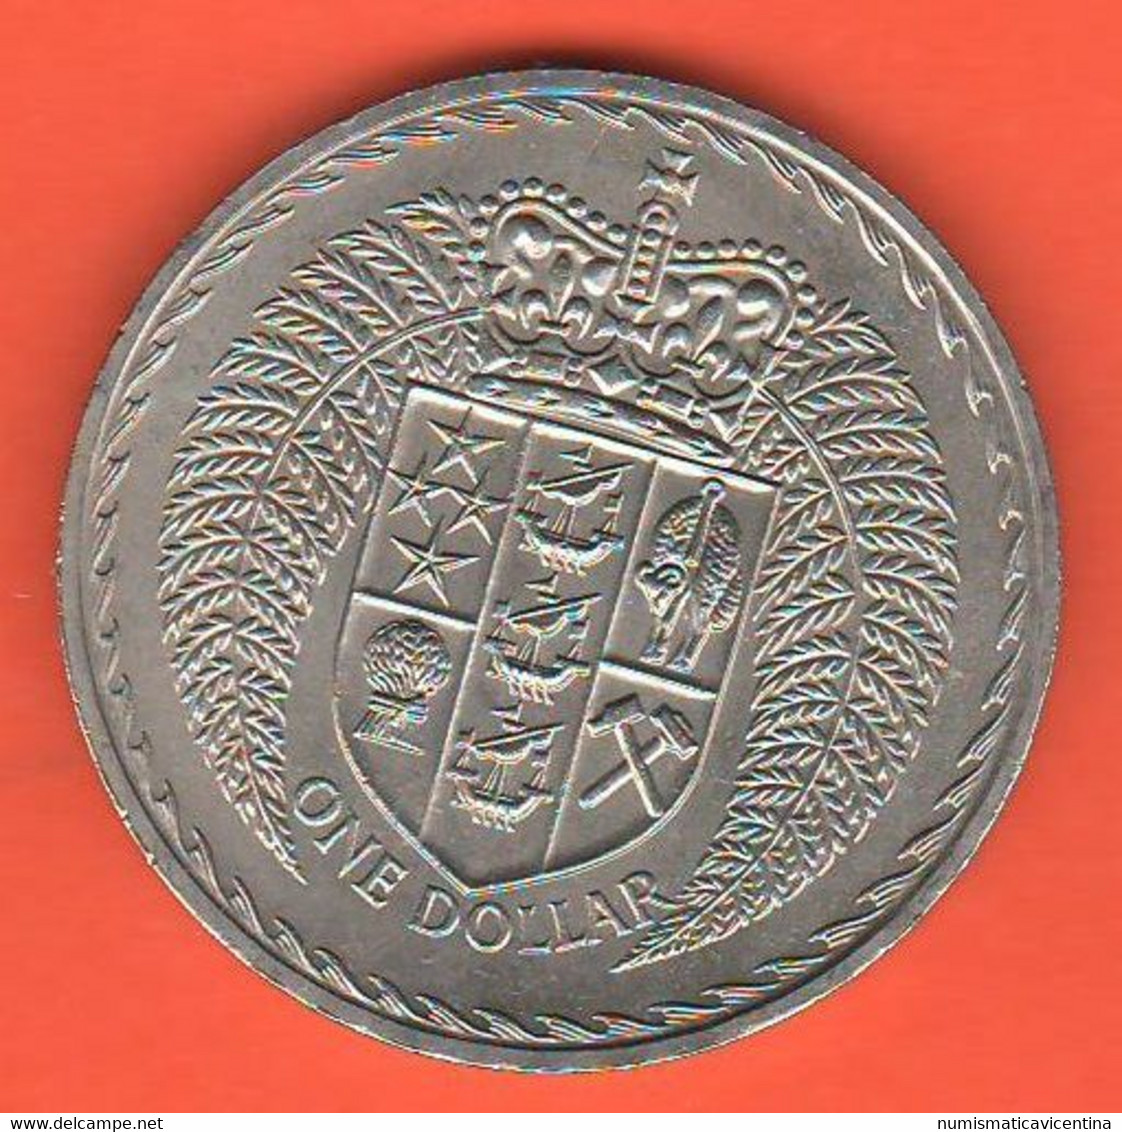 Nuova Zelanda 1 Dollar $ 1967 New Zeland Nikel Coin - New Zealand